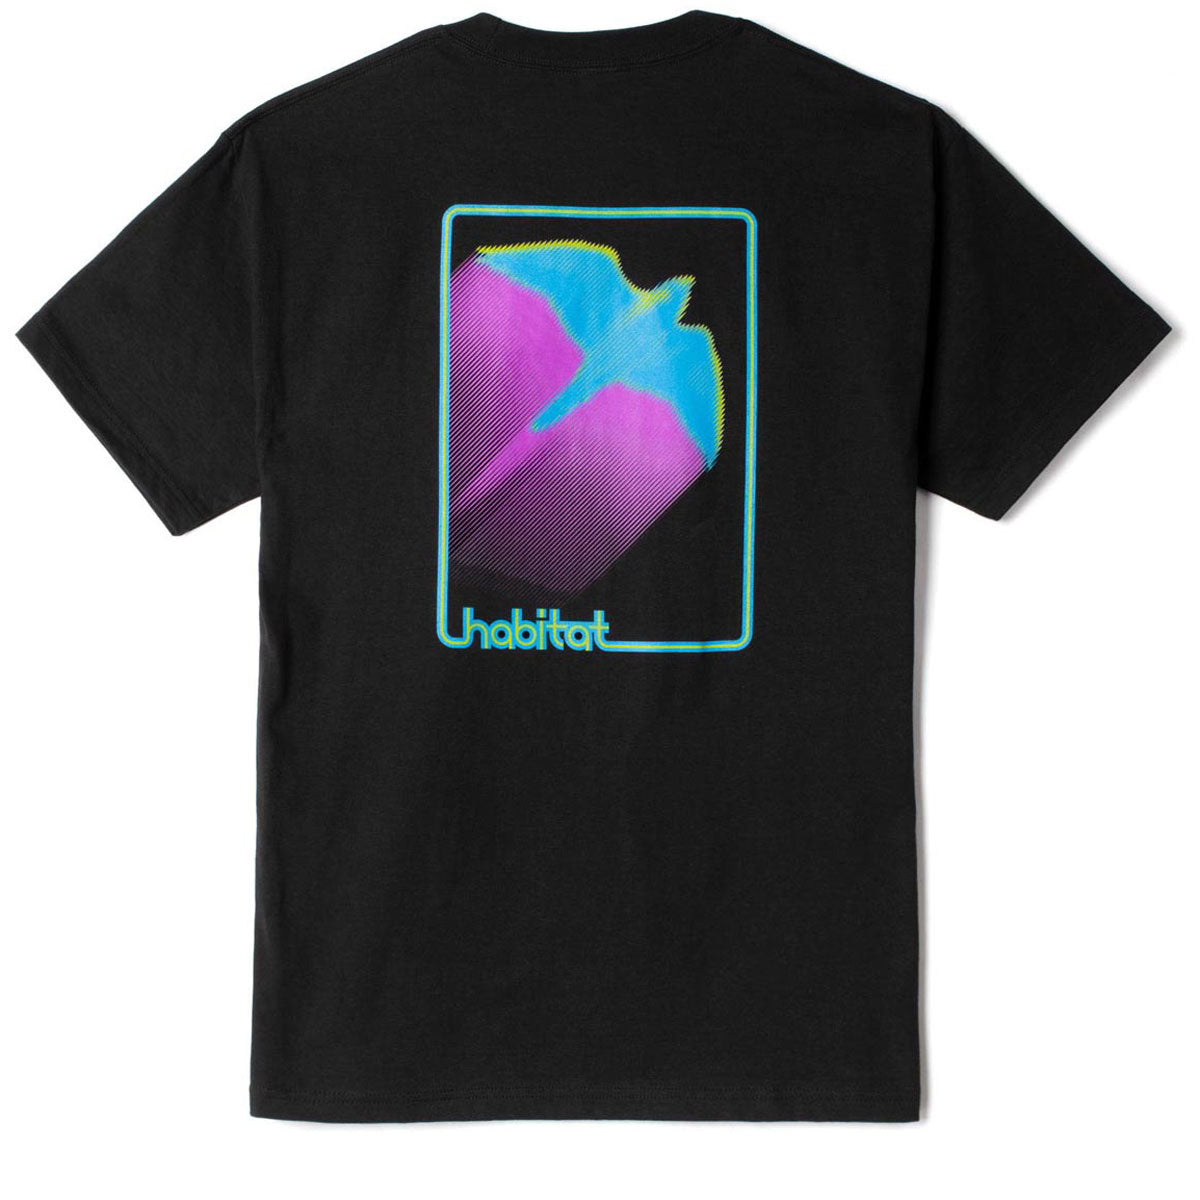 Habitat Speed Test T-Shirt - Black image 1